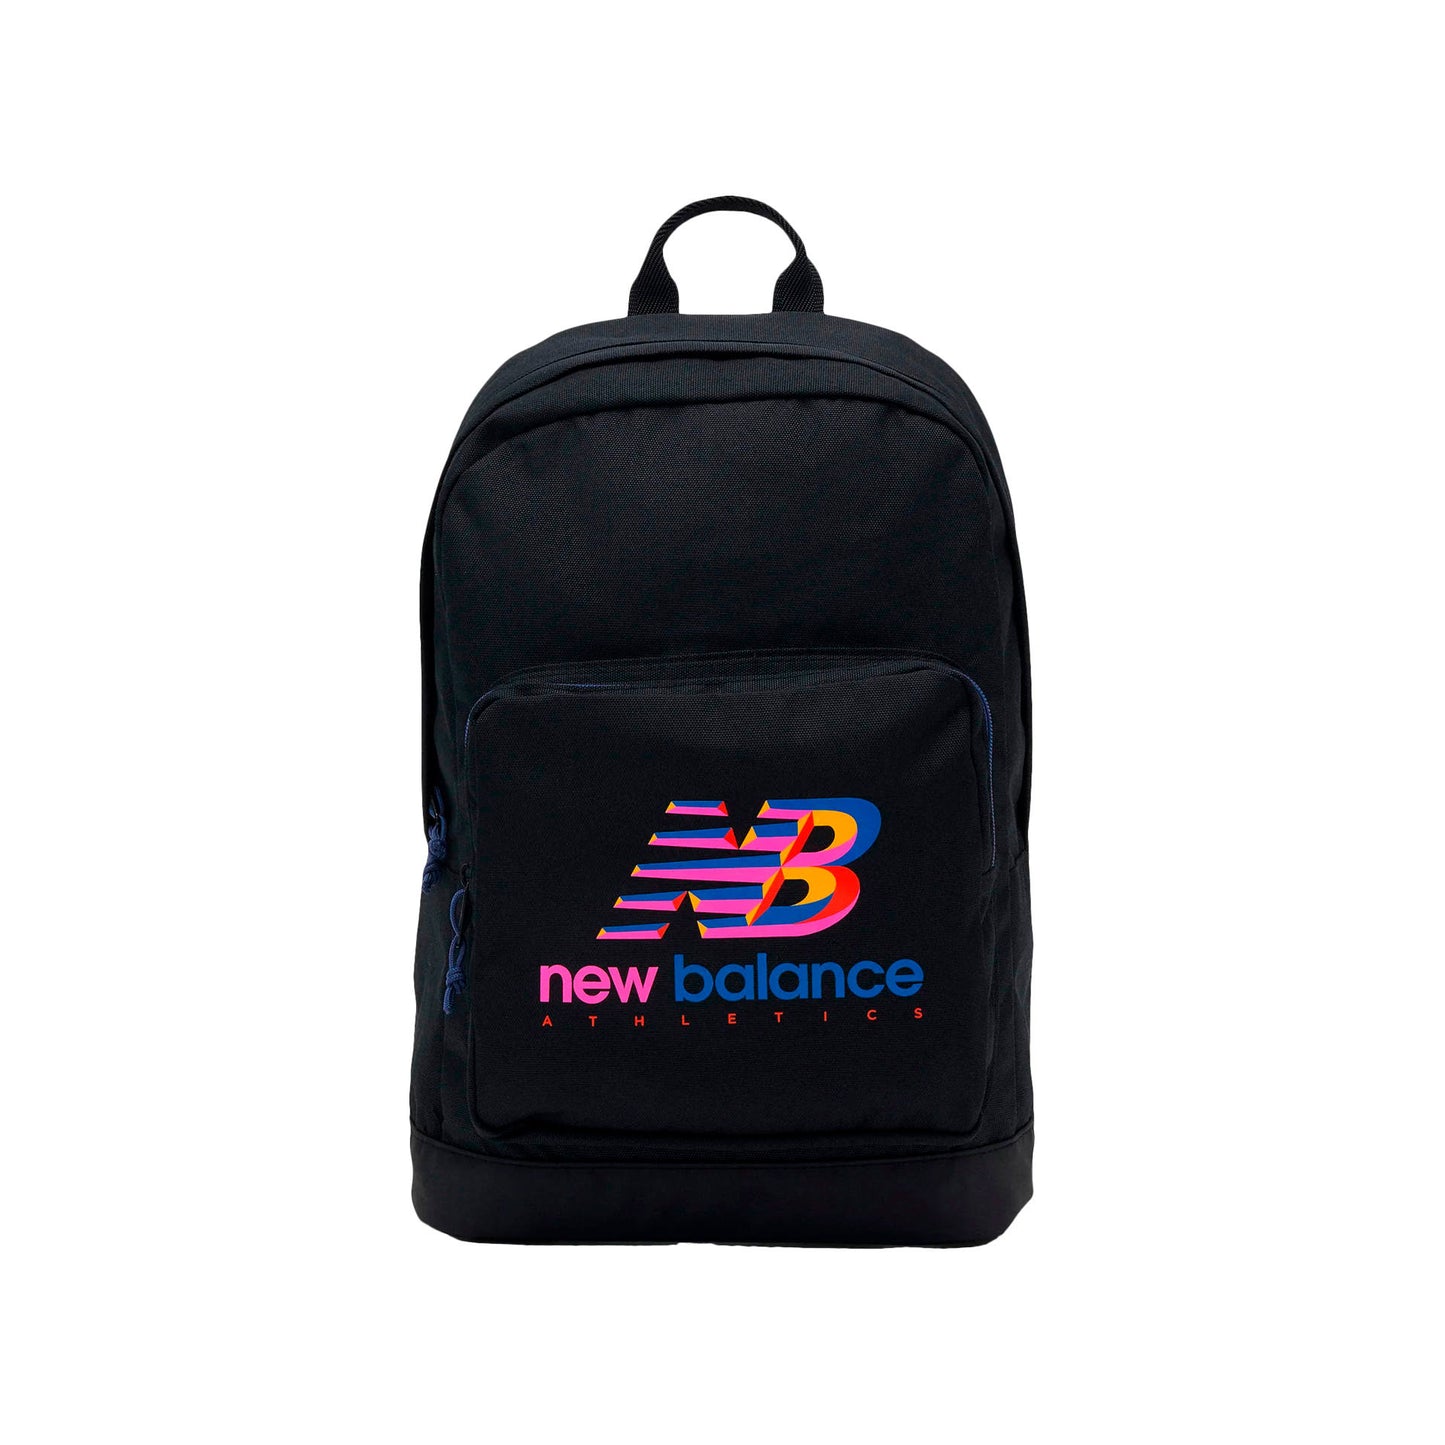 Zaino New Balance Urban backpack black - LNS lanovashoes 